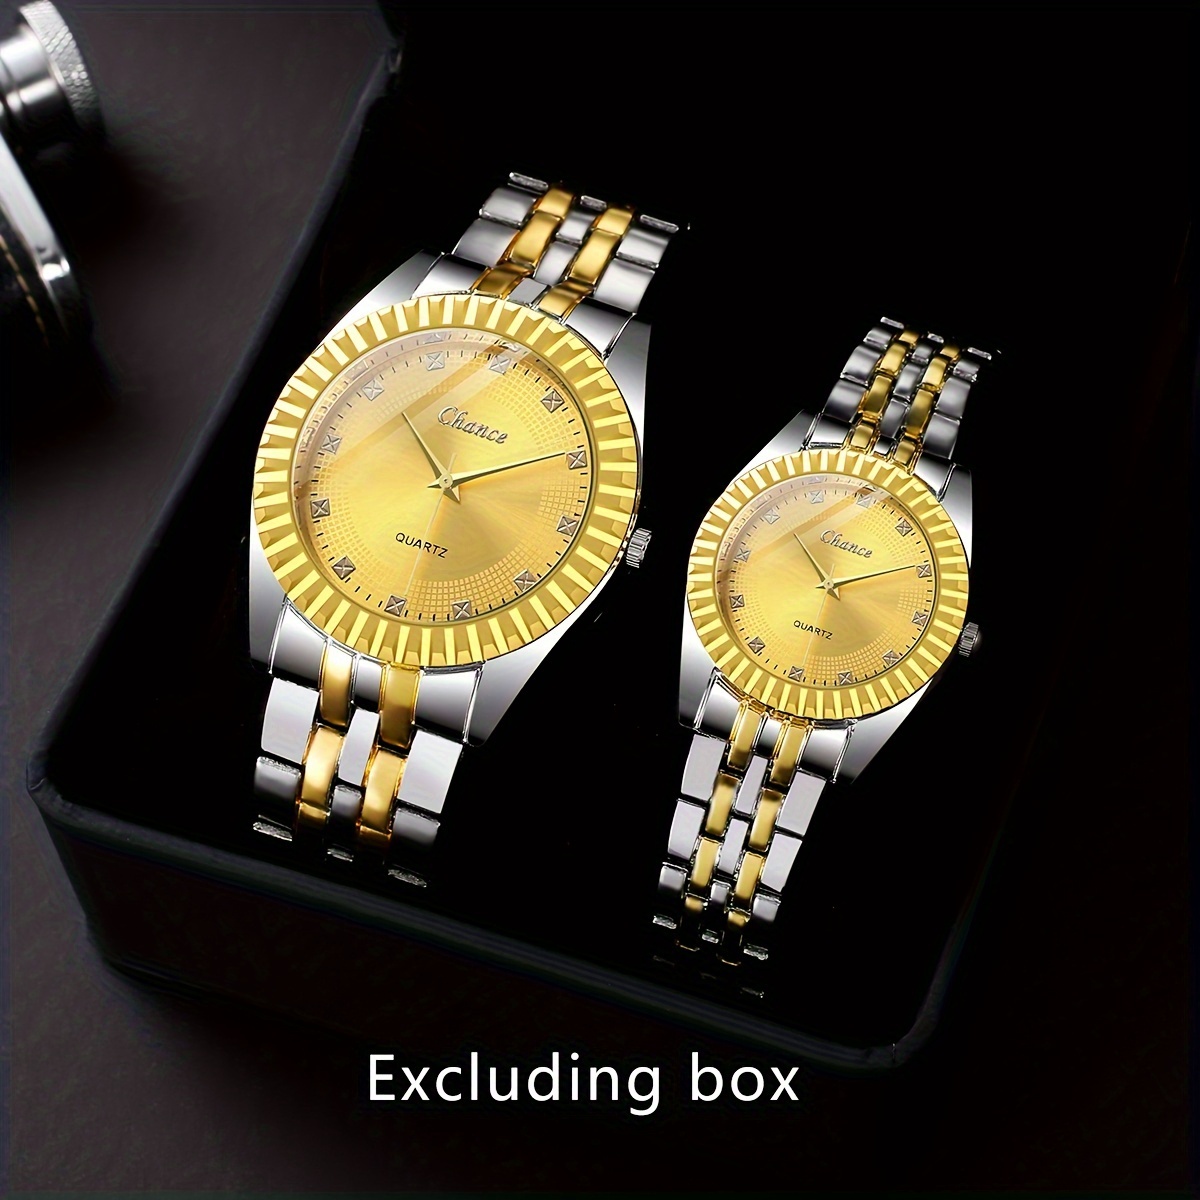 

2pcs Couples Business Leisure Quartz Watch Luxury Fashion Analog Wrist Watch, Valentine's Day Gift For Women Men